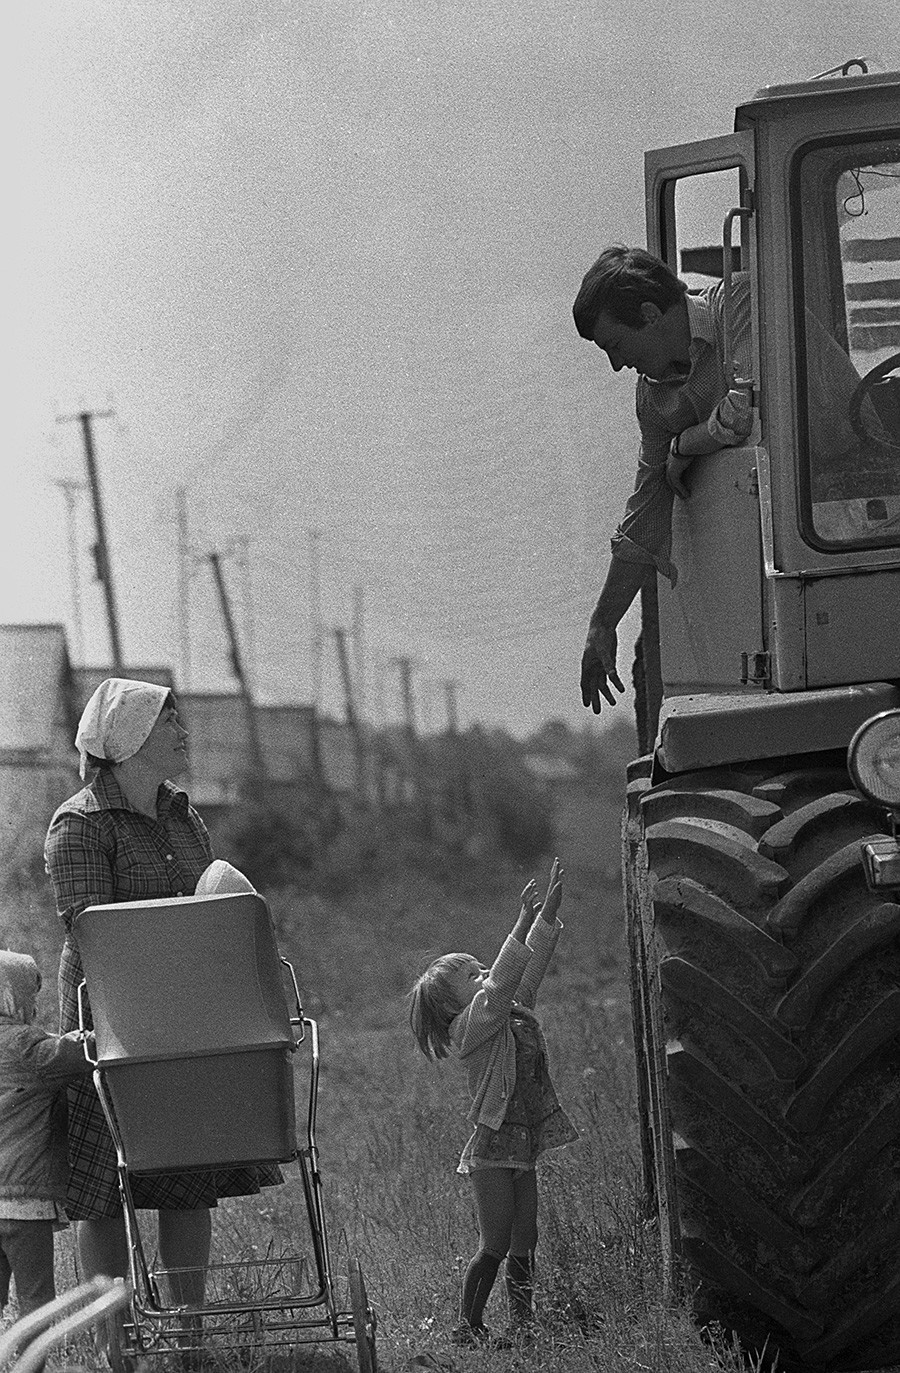 Upravljavec stroja kolhoza Sovjetska Belorusija se je vrnil domov s polja, 1987

